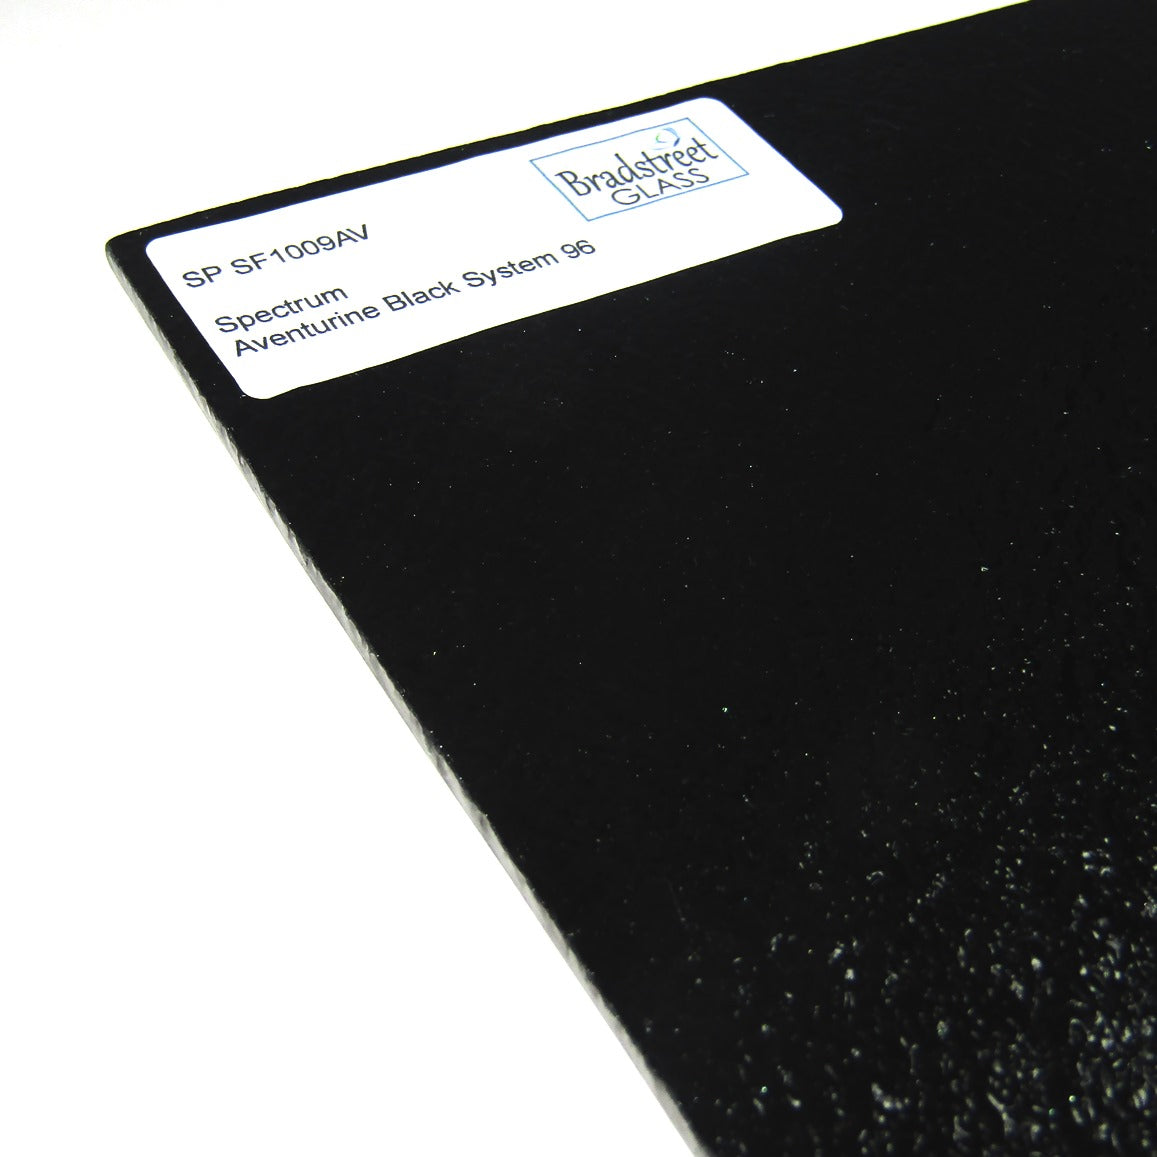 Black Aventurine Stained Glass Sheet System 96 Opaque Fusible Spectrum SF1009AV